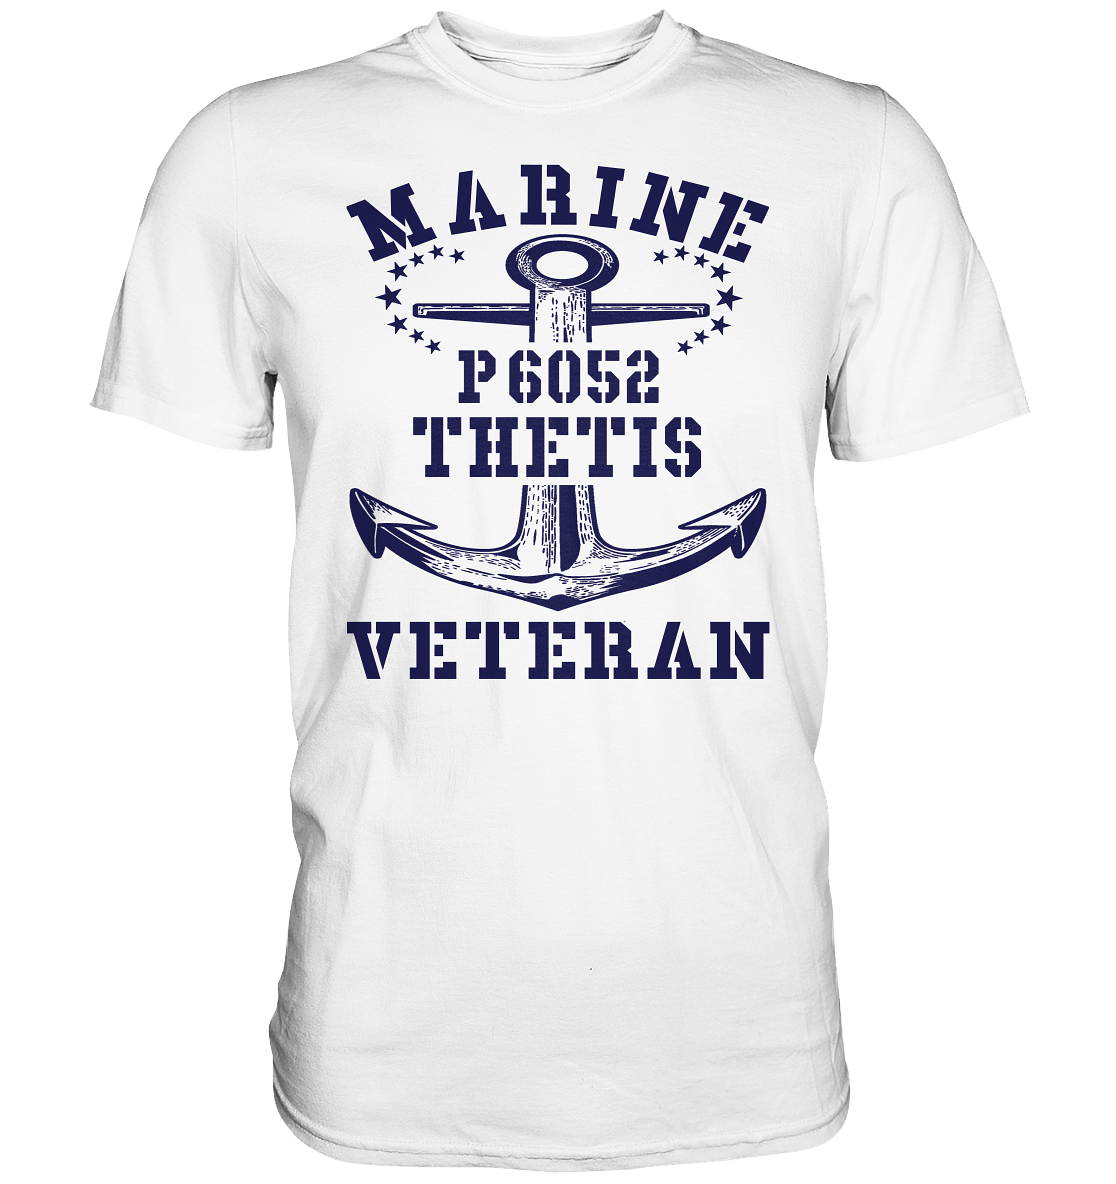 U-Jagdboot P6052 THETIS Marine Veteran - Premium Shirt